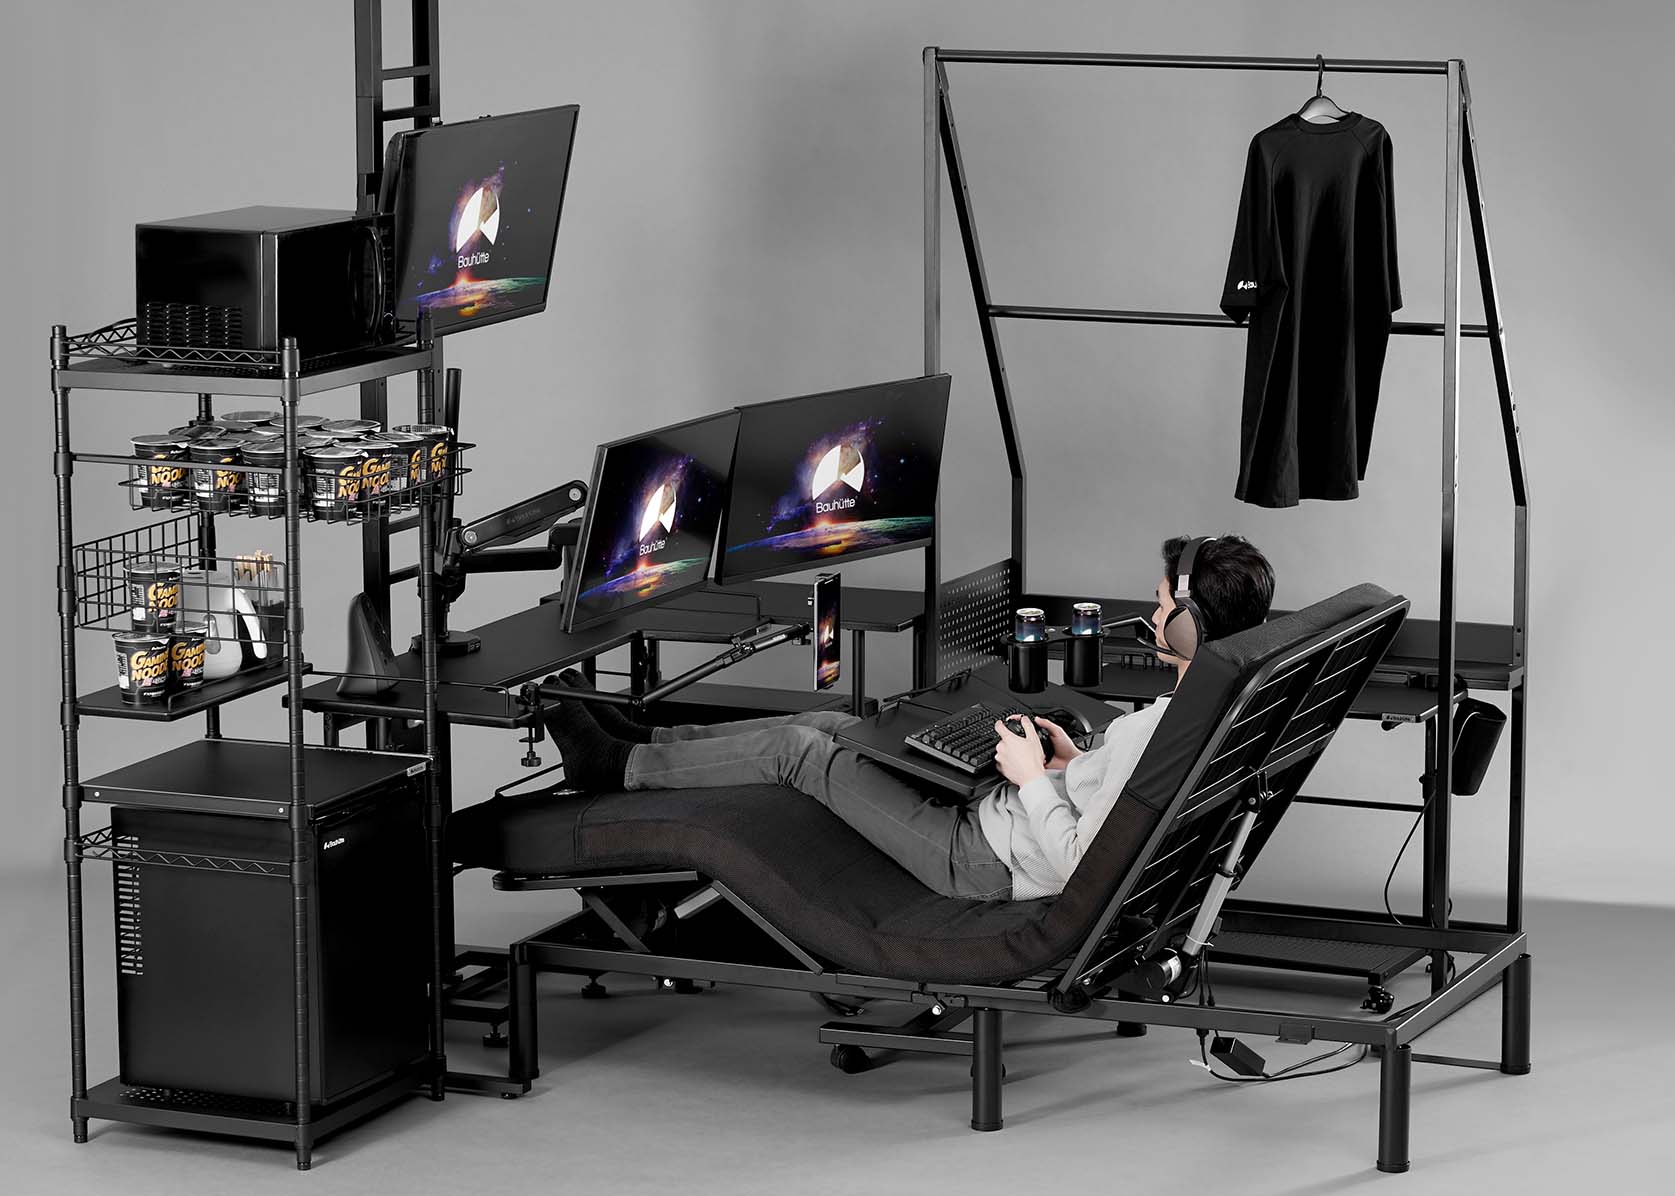 Bauhutte new transforming gaming chair.